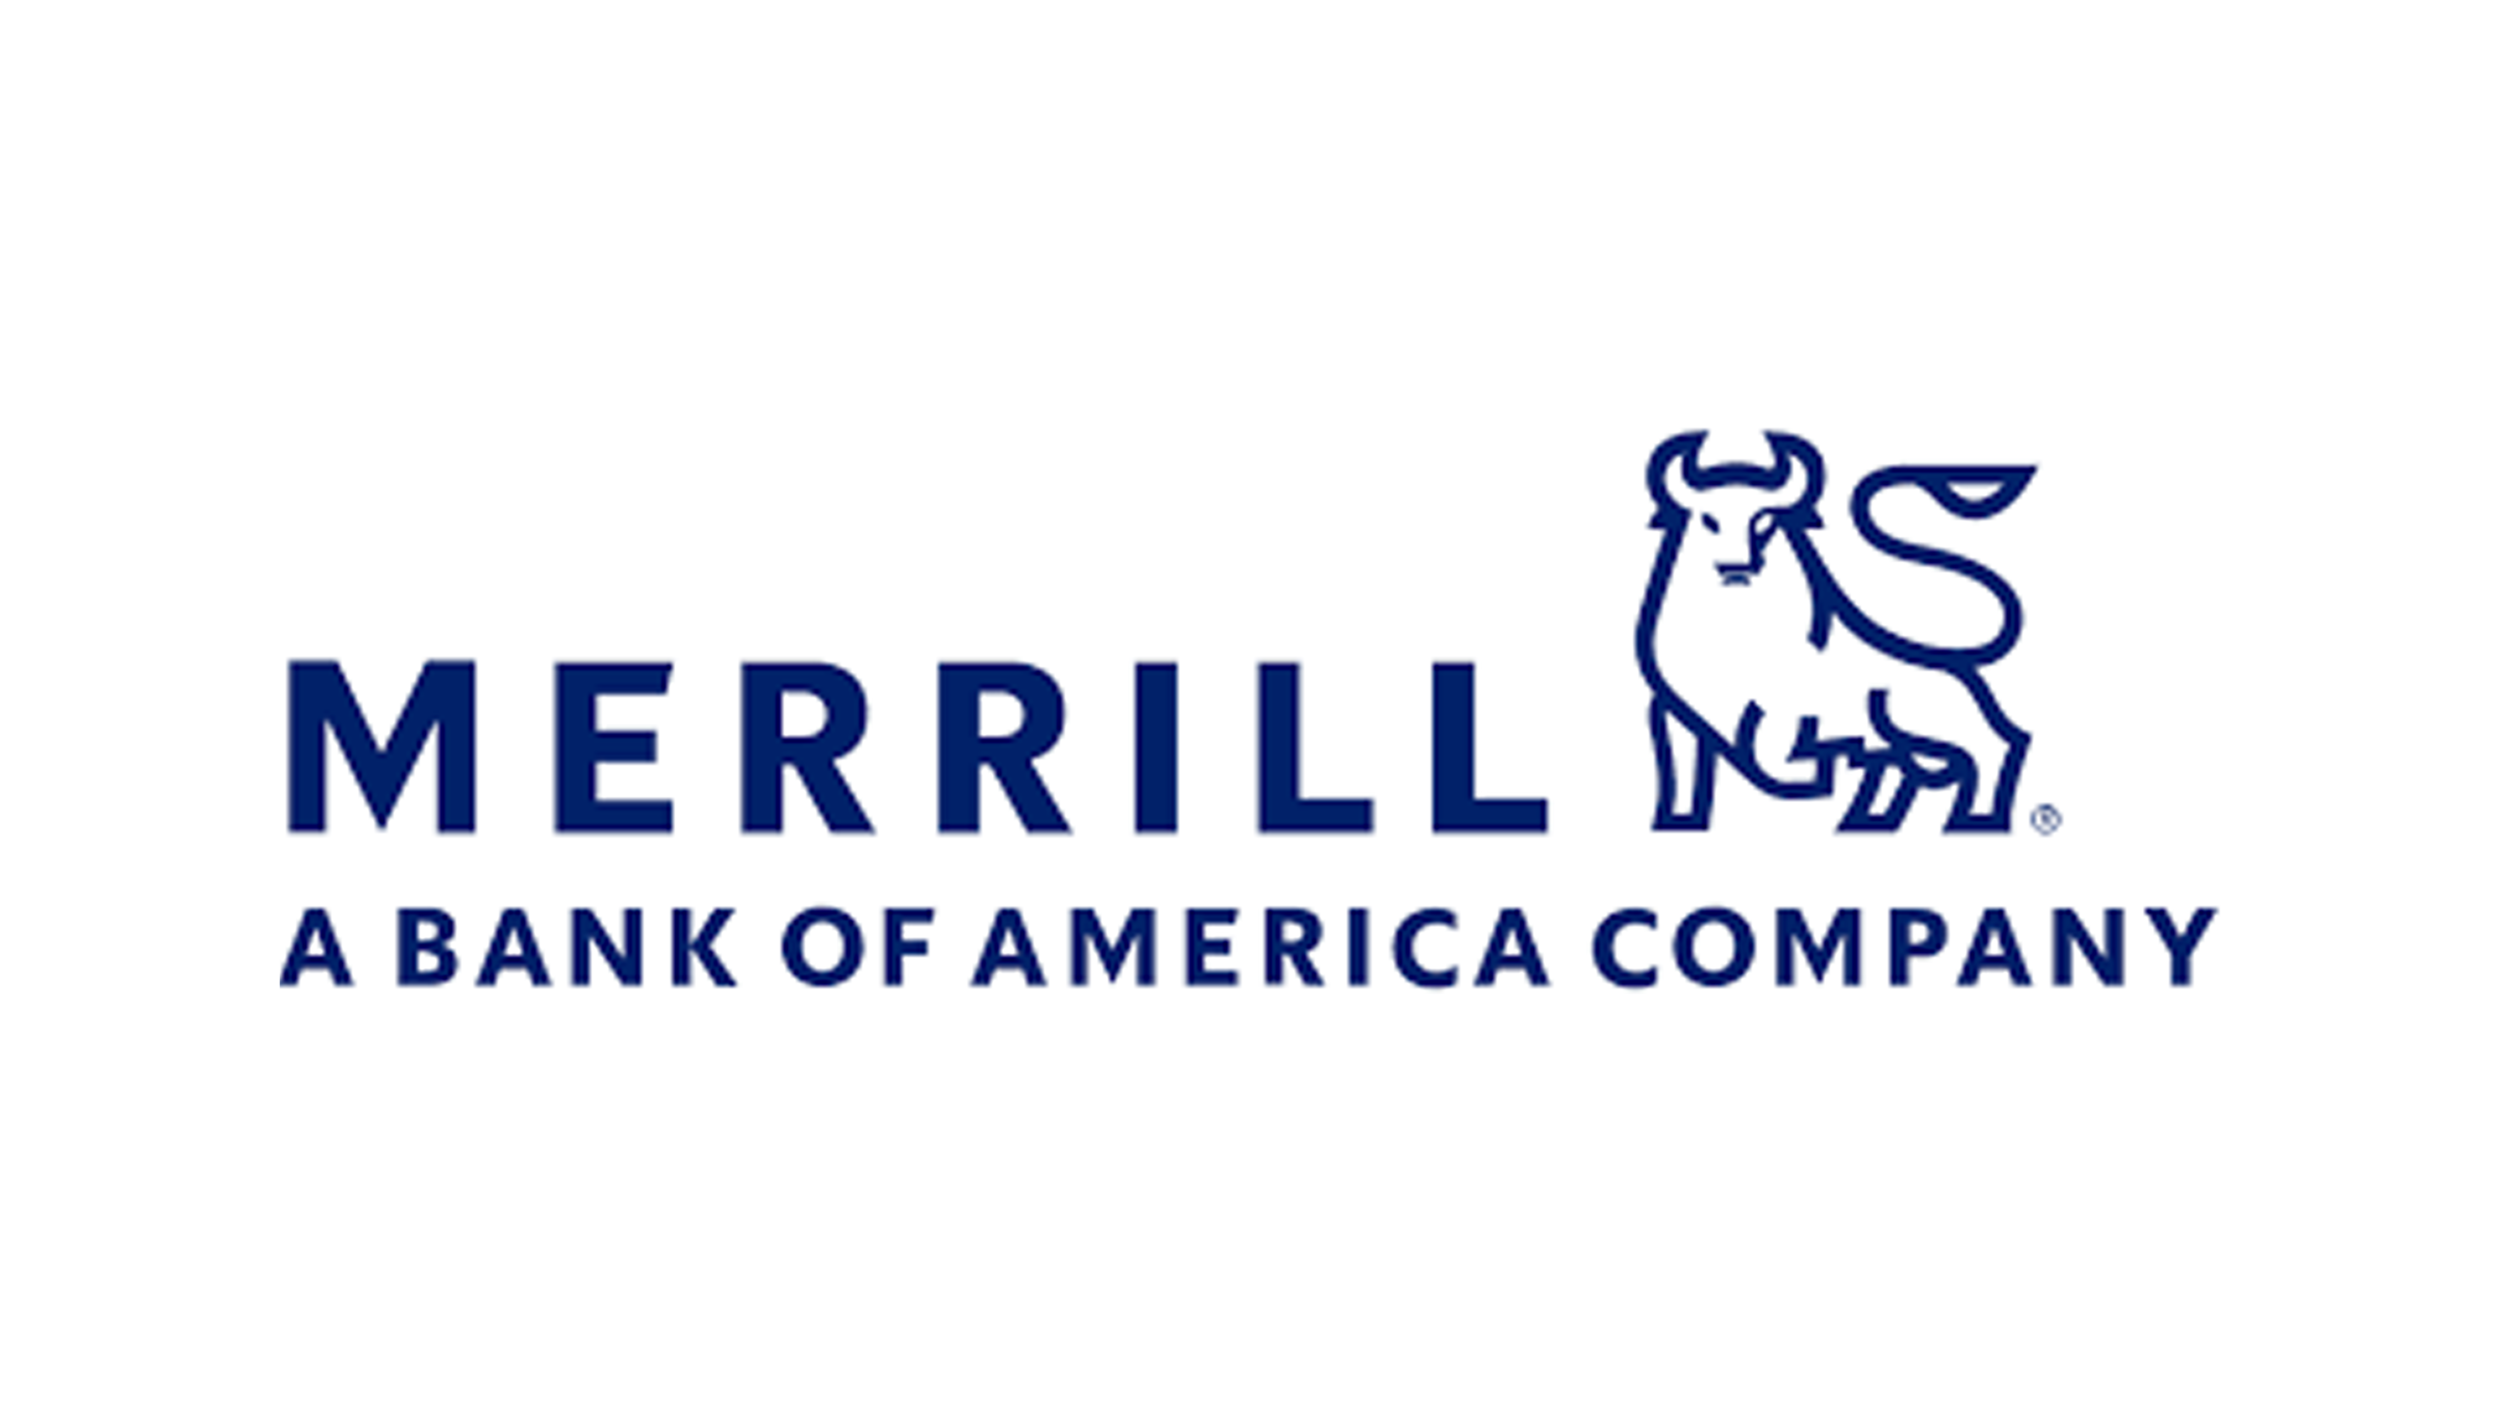 Merrill | A Bank of America Company logo